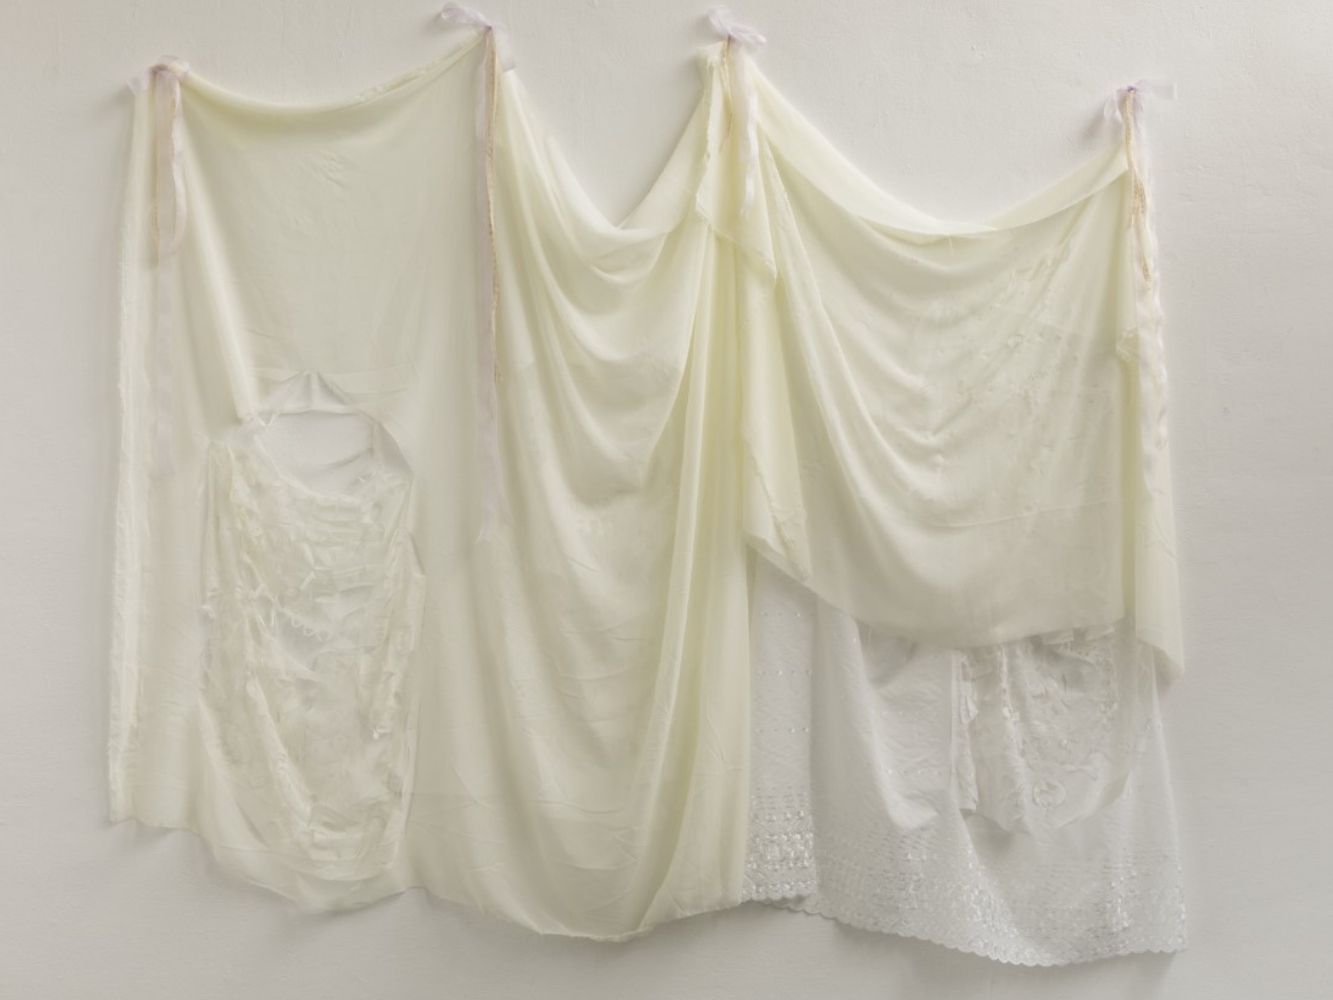 Cream coloured sheet draped on a white wall